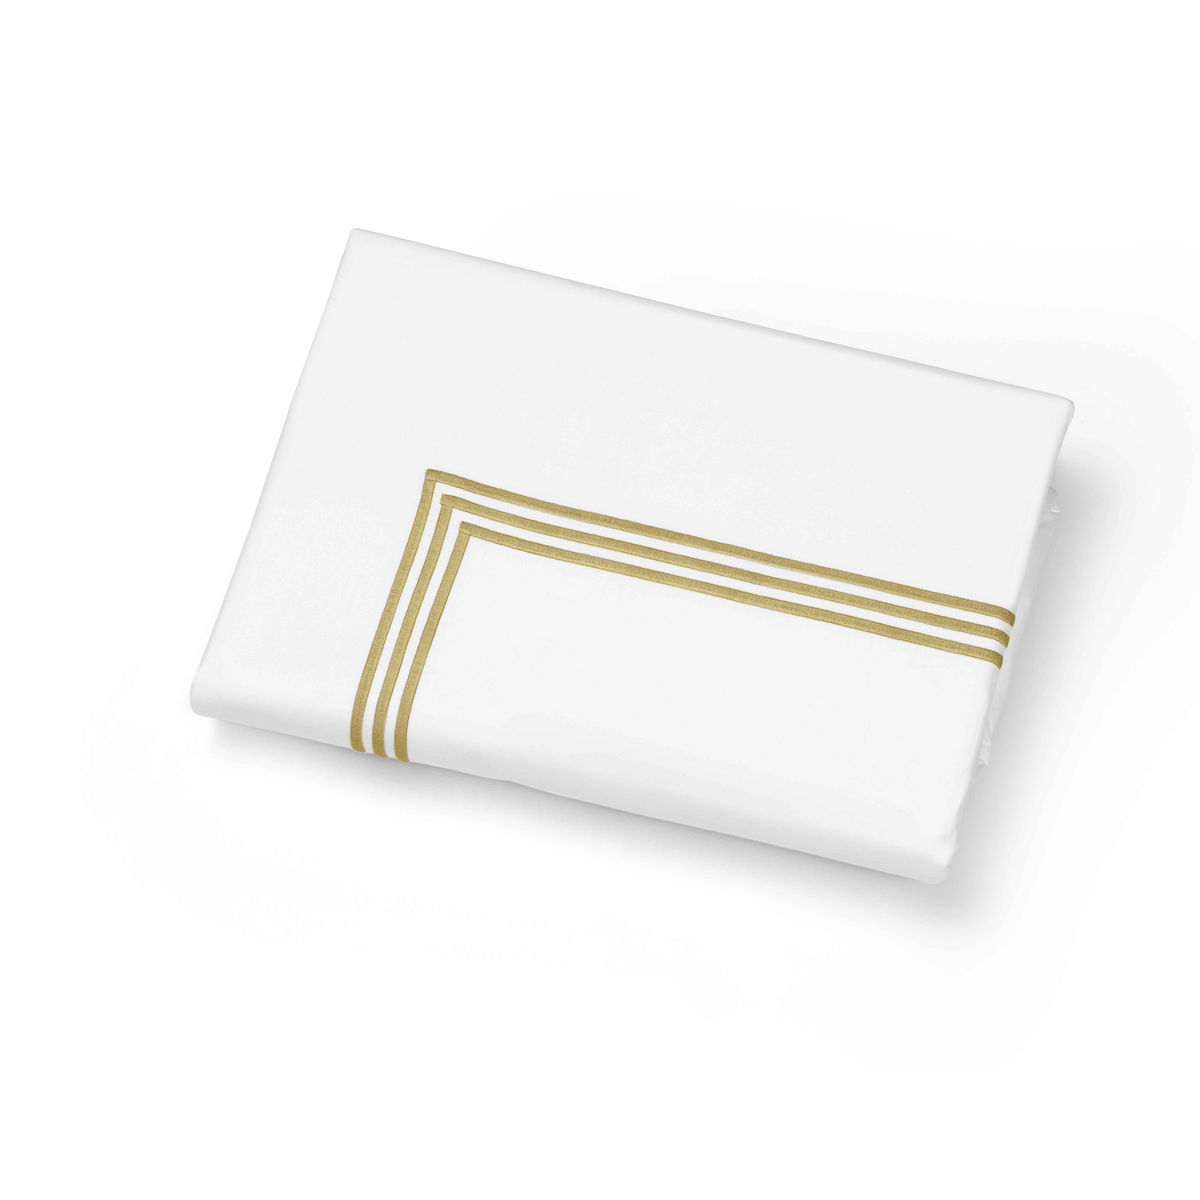 Folded Duvet Cover of Signoria Platinum Percale Bedding in White/Caramel Color